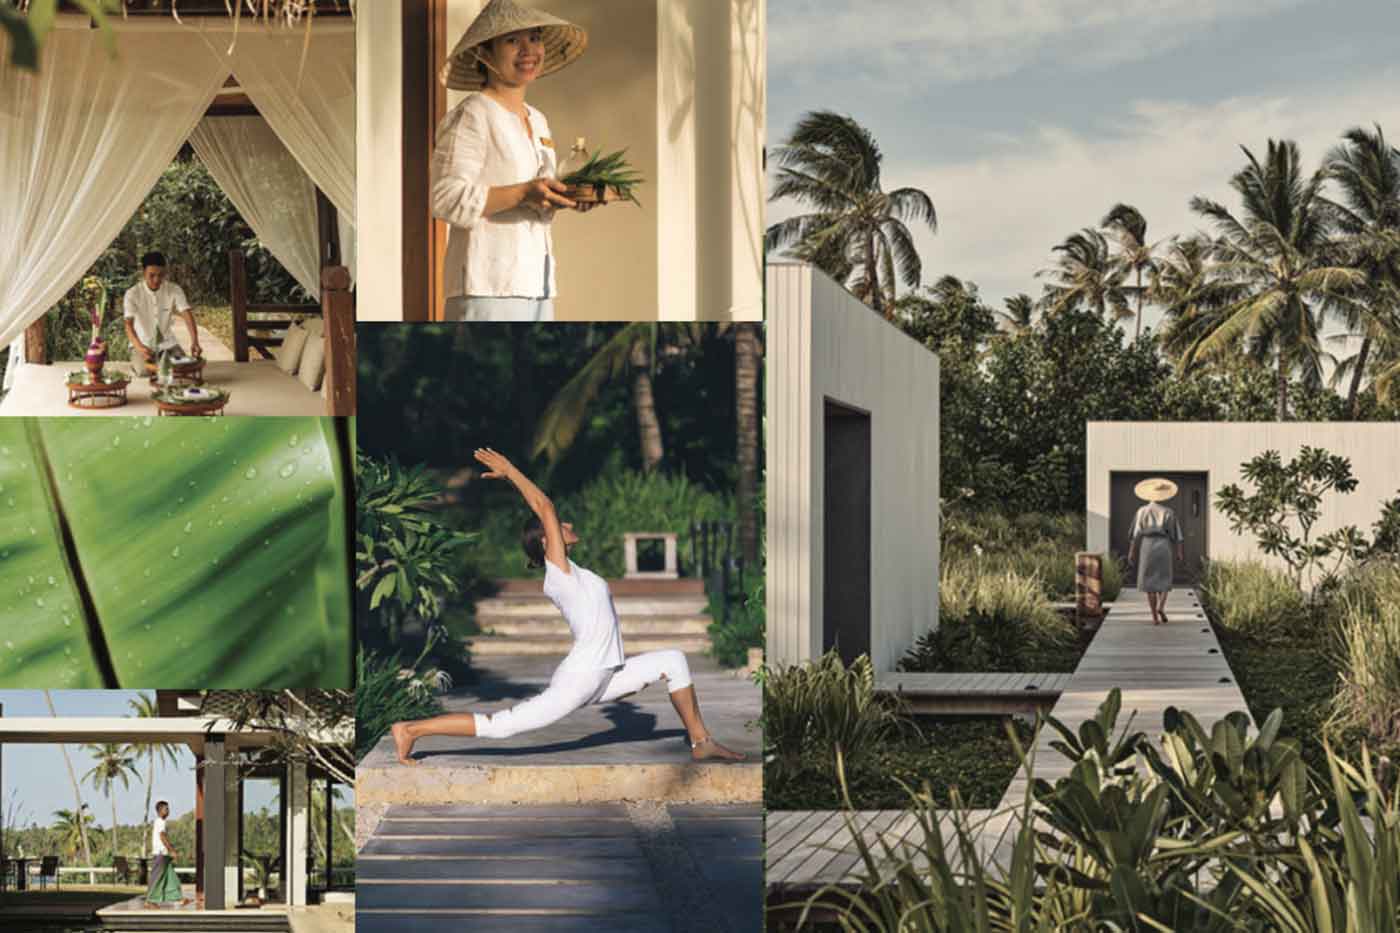 Ridhira Zen developed the first totally digitalized resort living environment